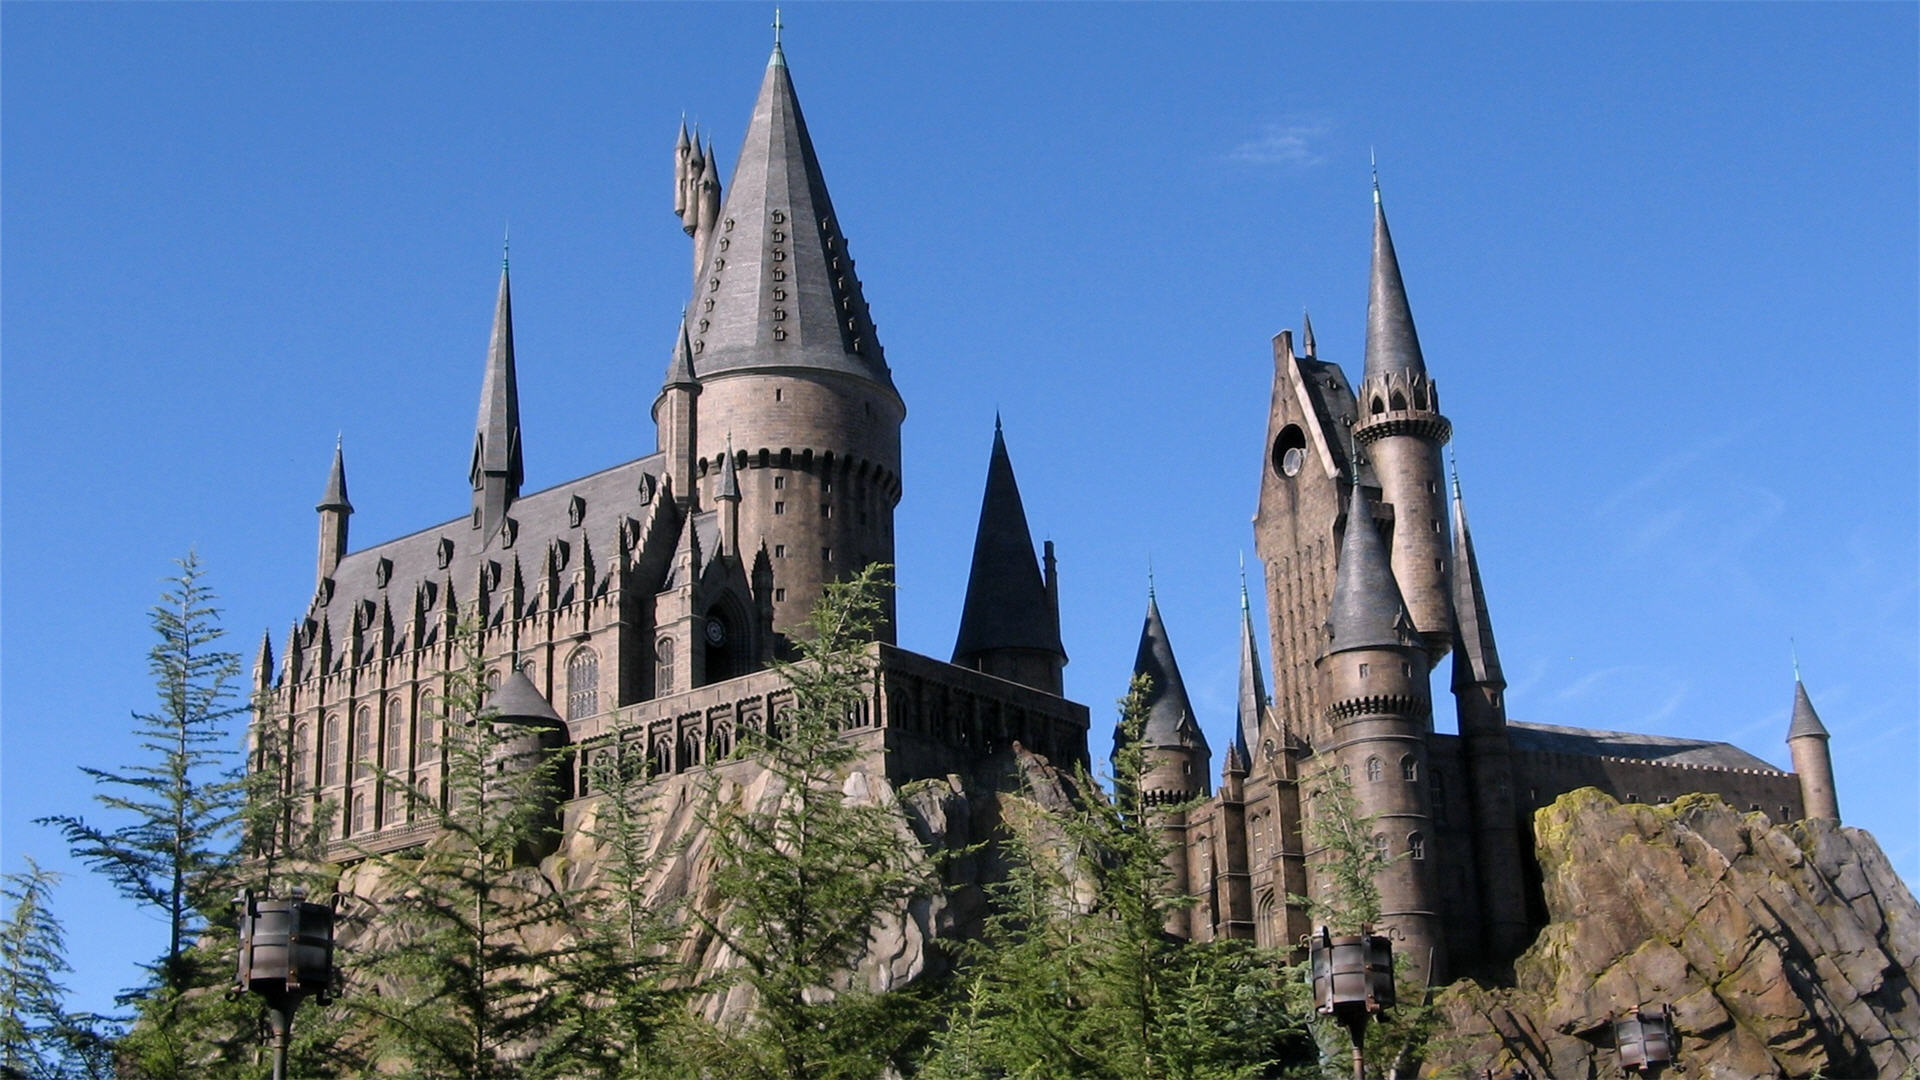 Hogwarts castle wallpaper